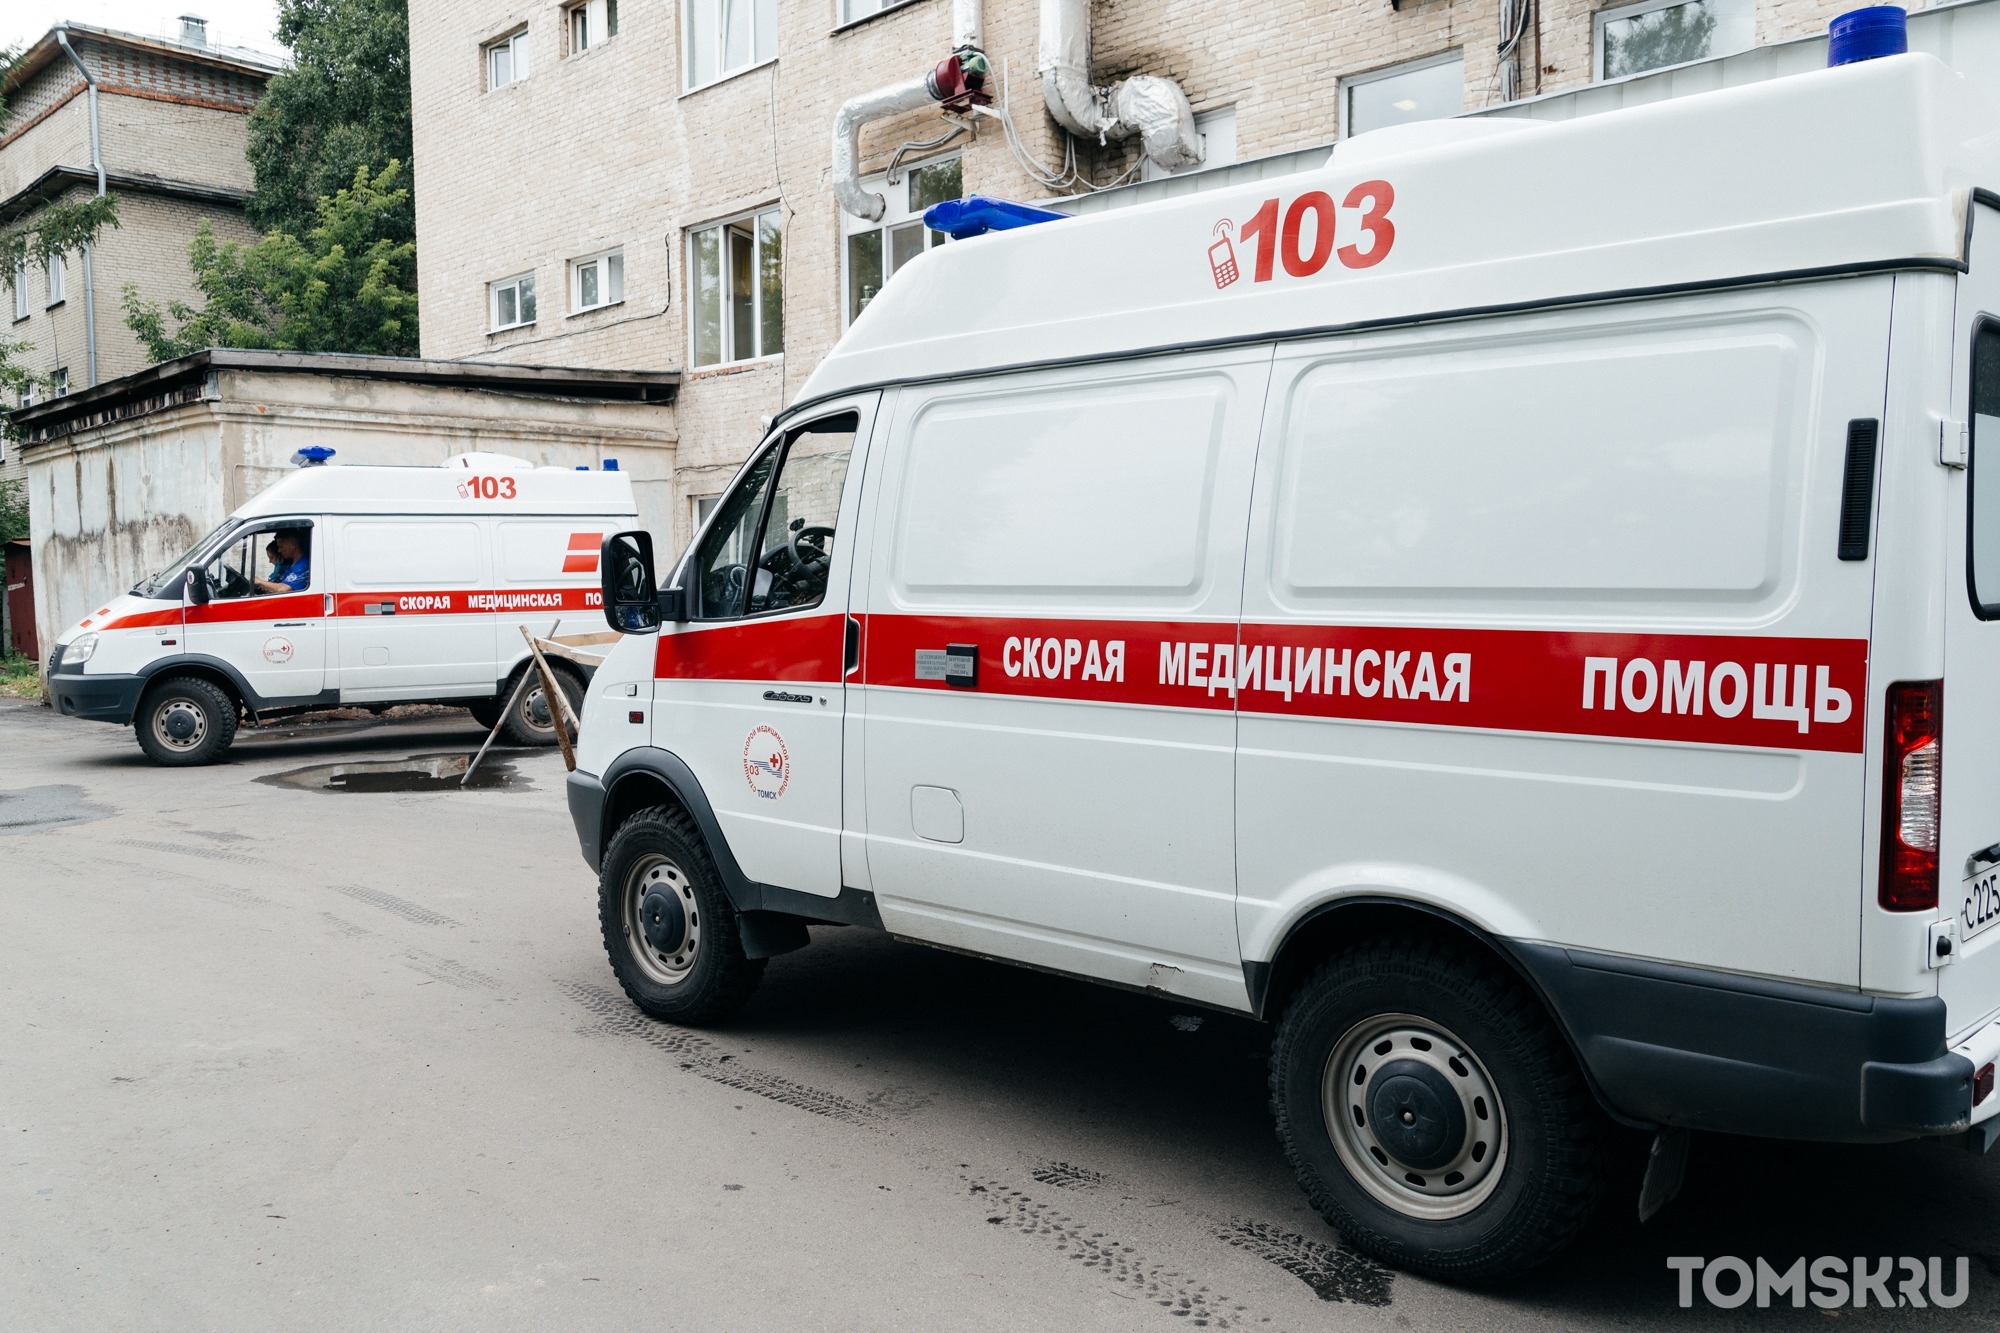 12 сотрудников скорой помощи заболели COVID-19 в Томске